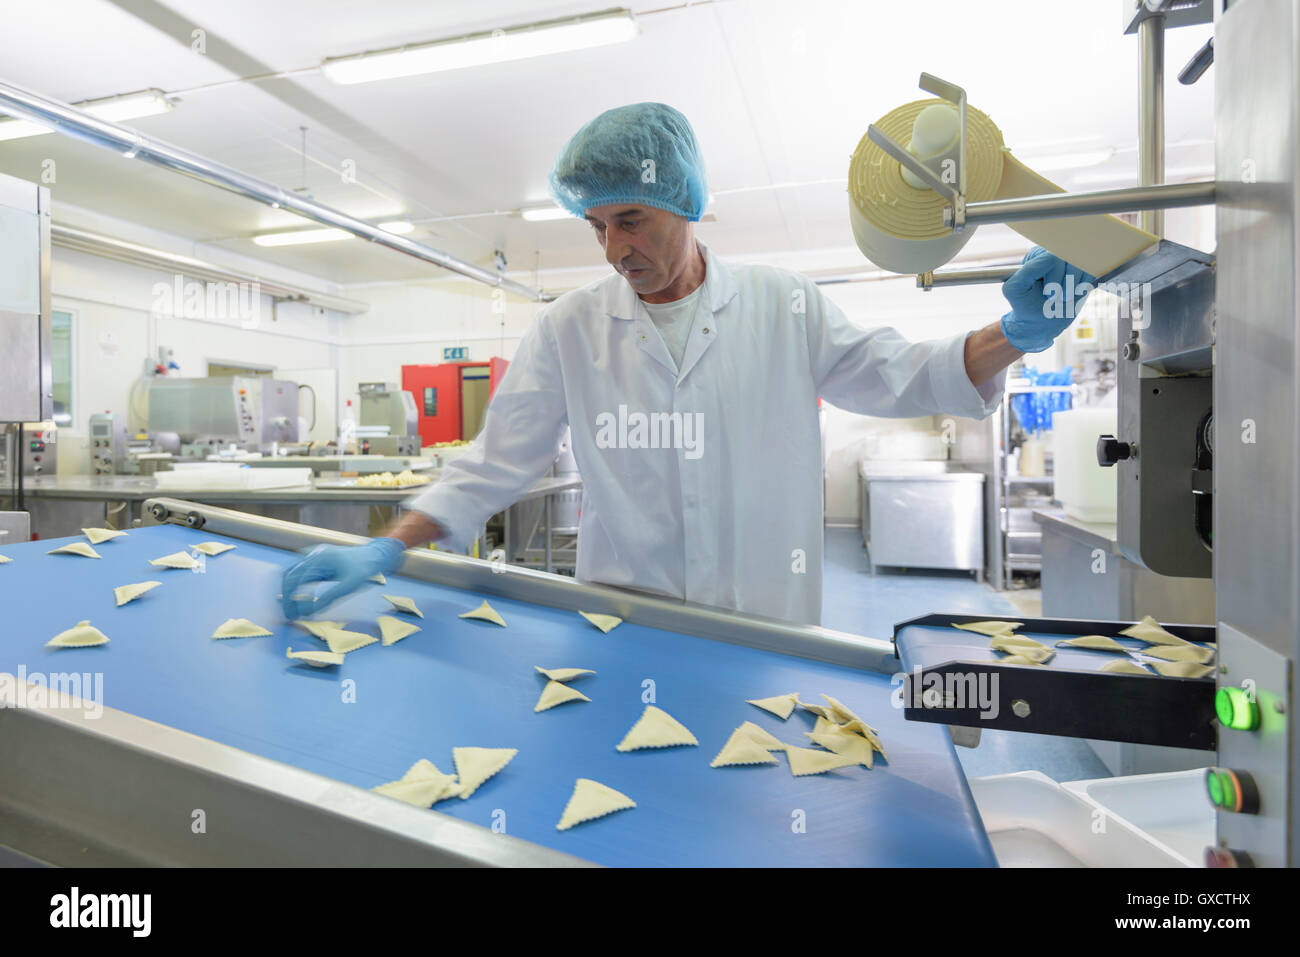 Worker sorting ravioli in pasta factory Stock Photo